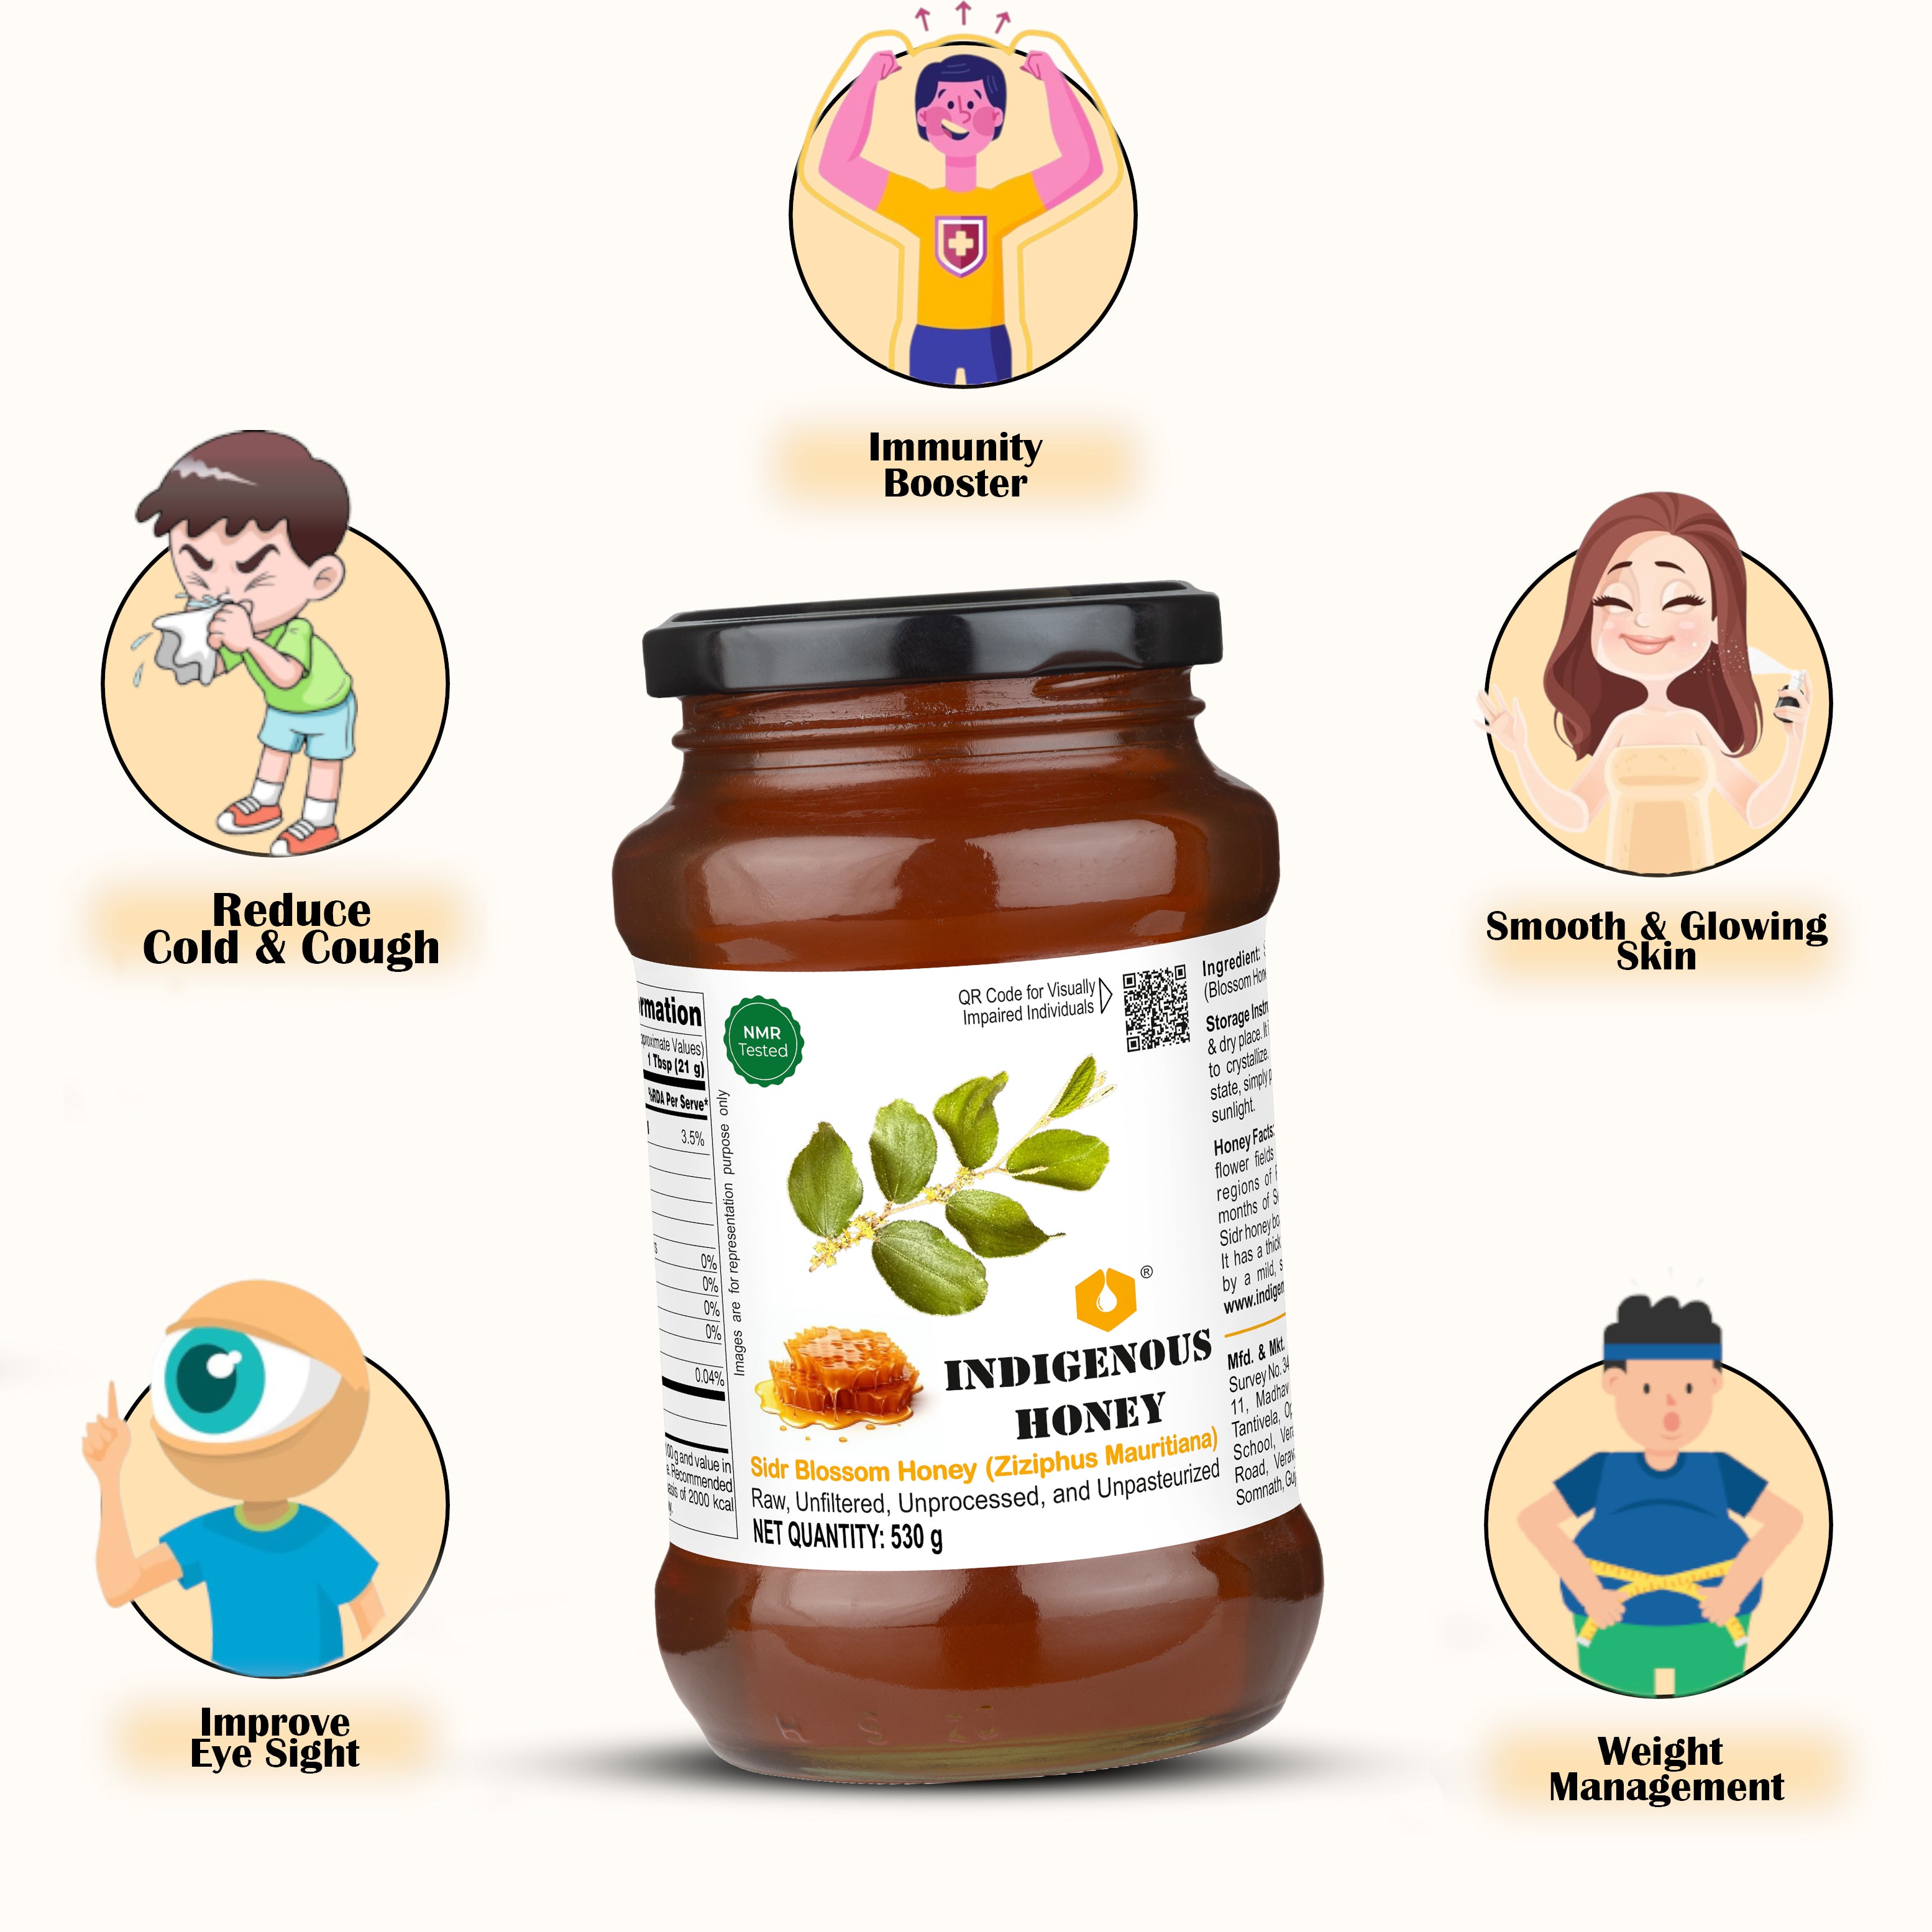 Benefits of Sidr Blossom Honey